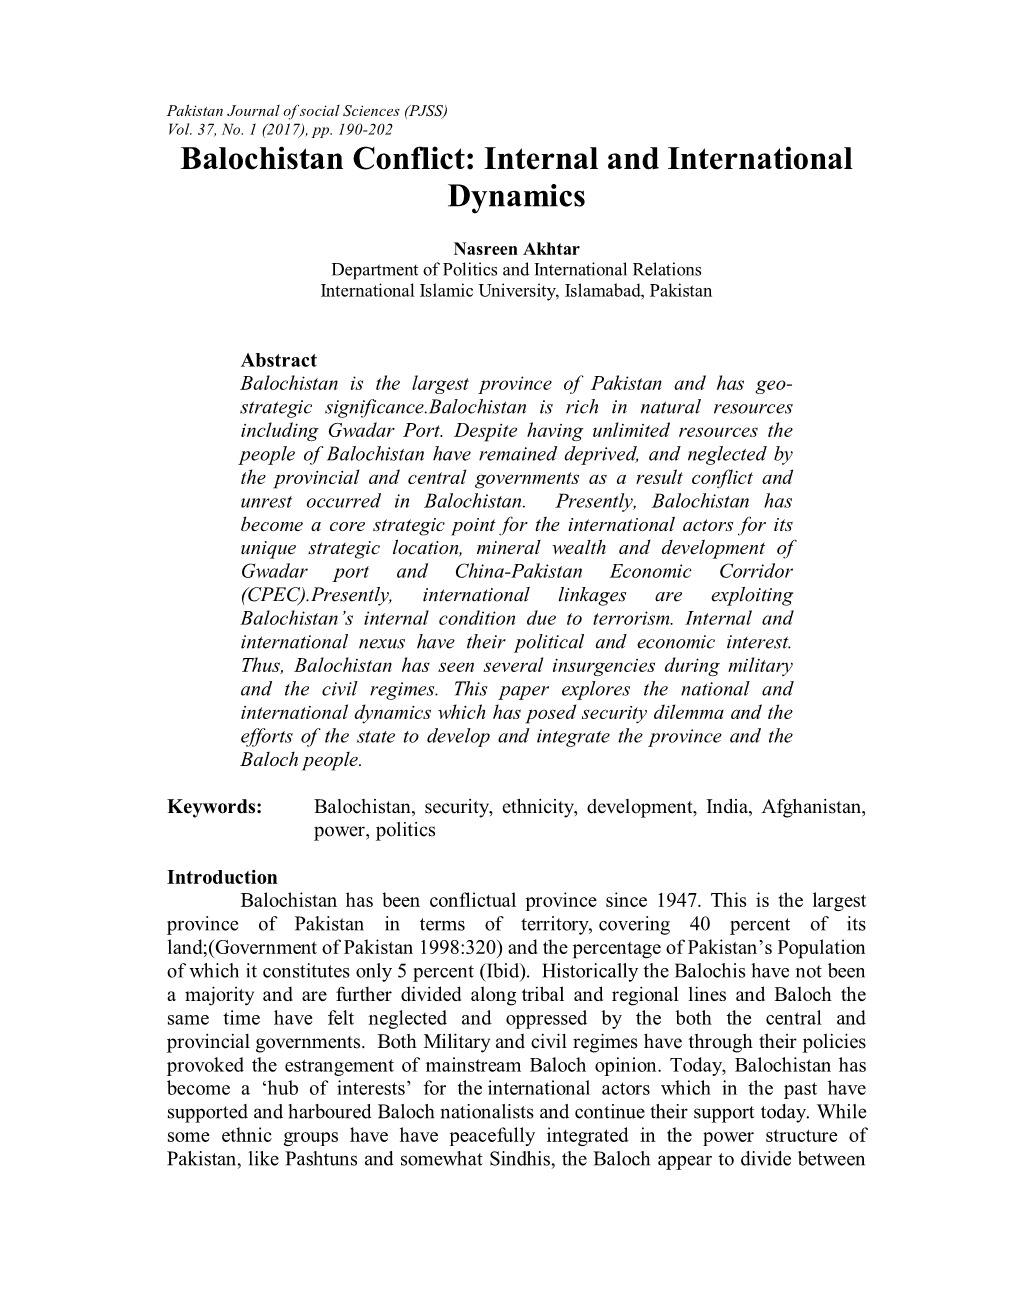 Balochistan Conflict: Internal and International Dynamics